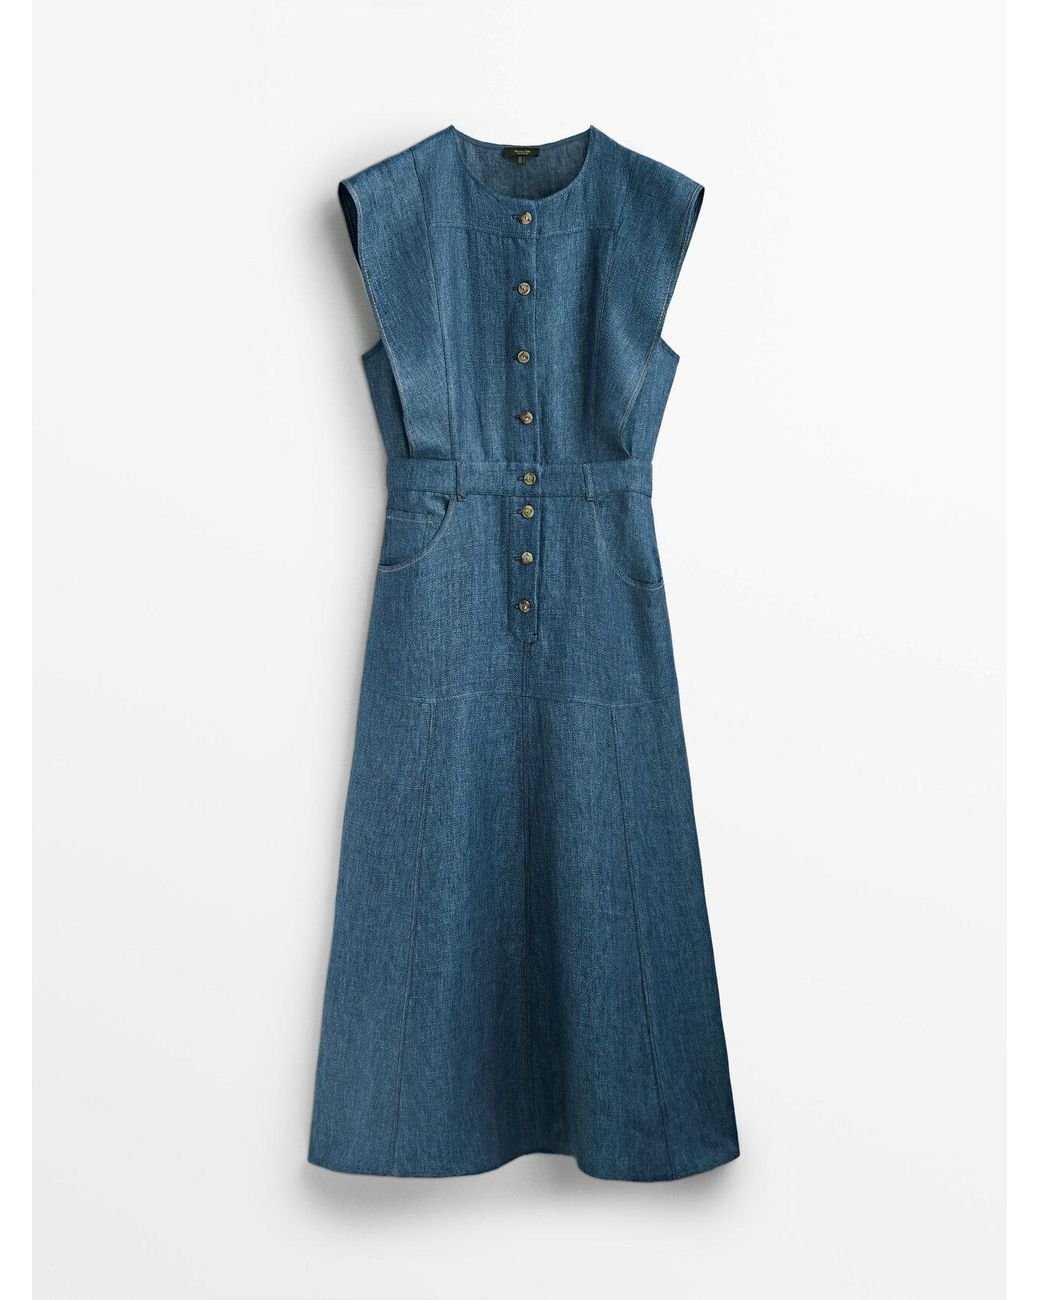 MASSIMO DUTTI Long Linen Denim Style Dress in Blue | Lyst